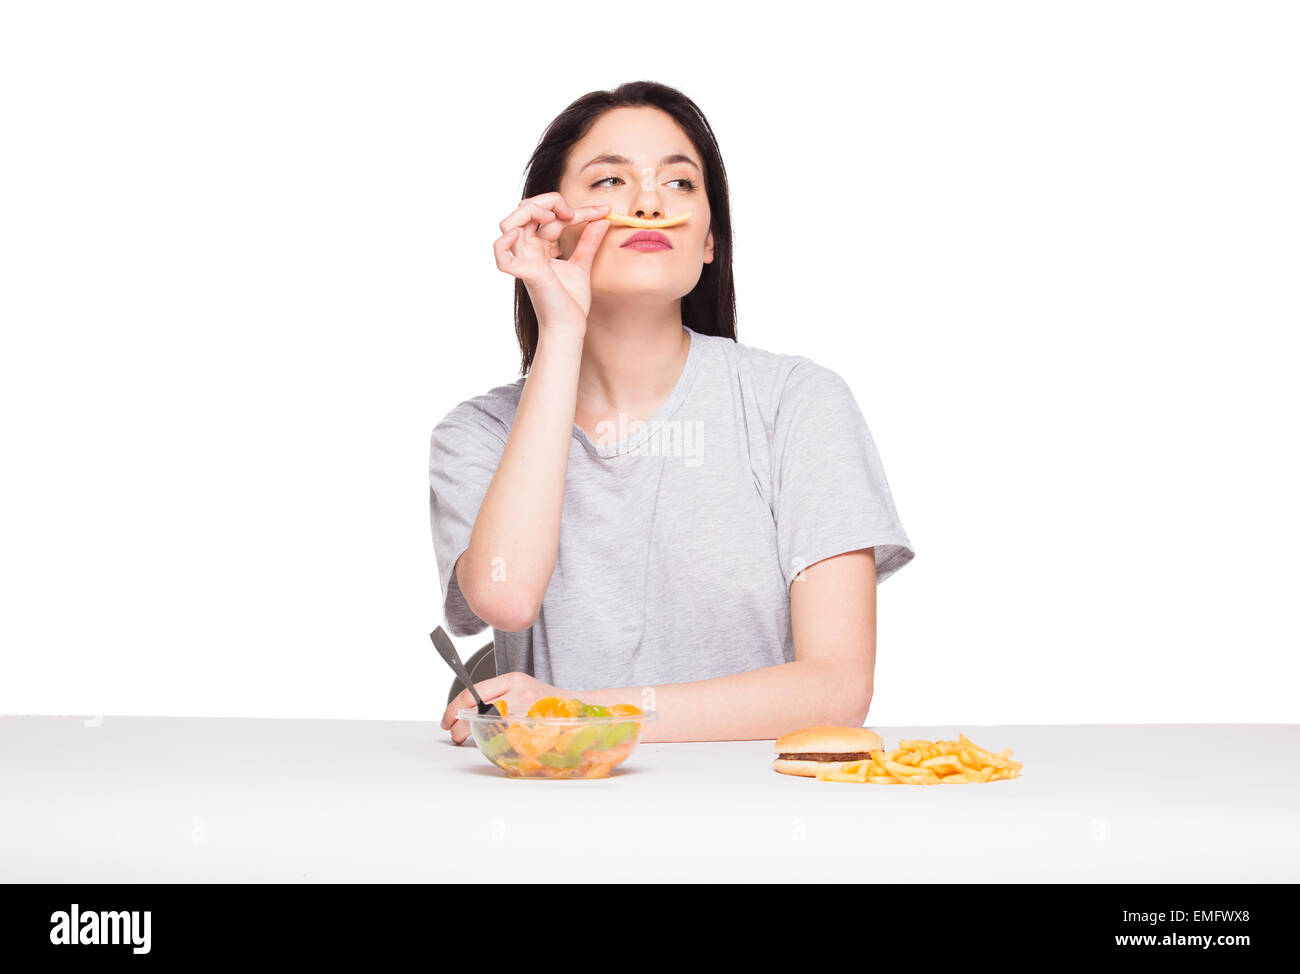 Expressif naturel femme jouant avec des frites, ayant en face junk et des aliments sains, isolated on white Banque D'Images